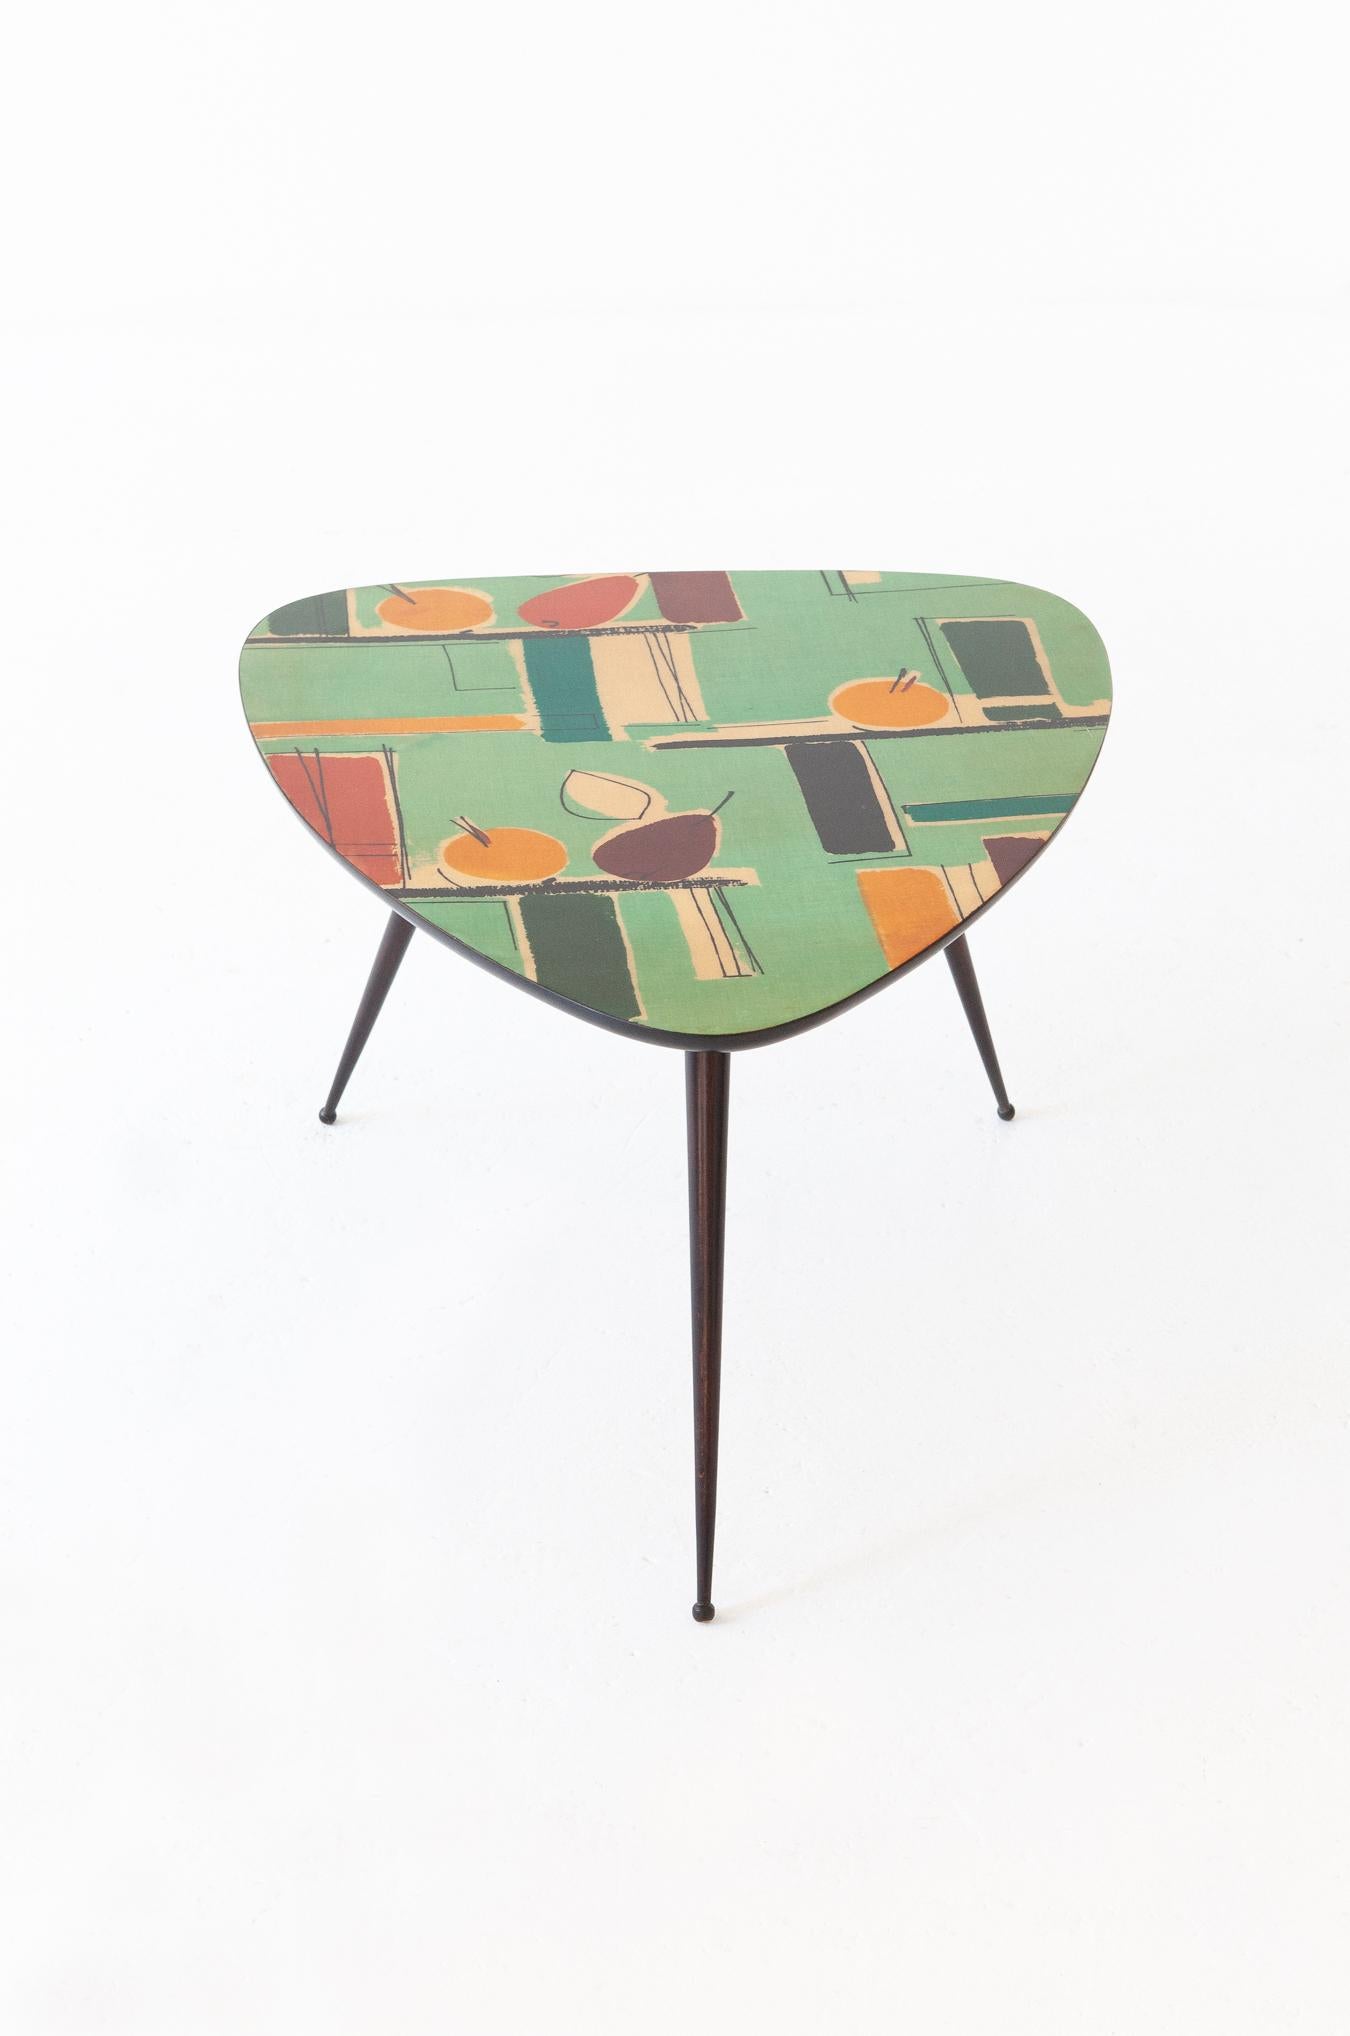 Wood Restored Italian Mid-Century Modern Triangular Coffee Table, 1950s